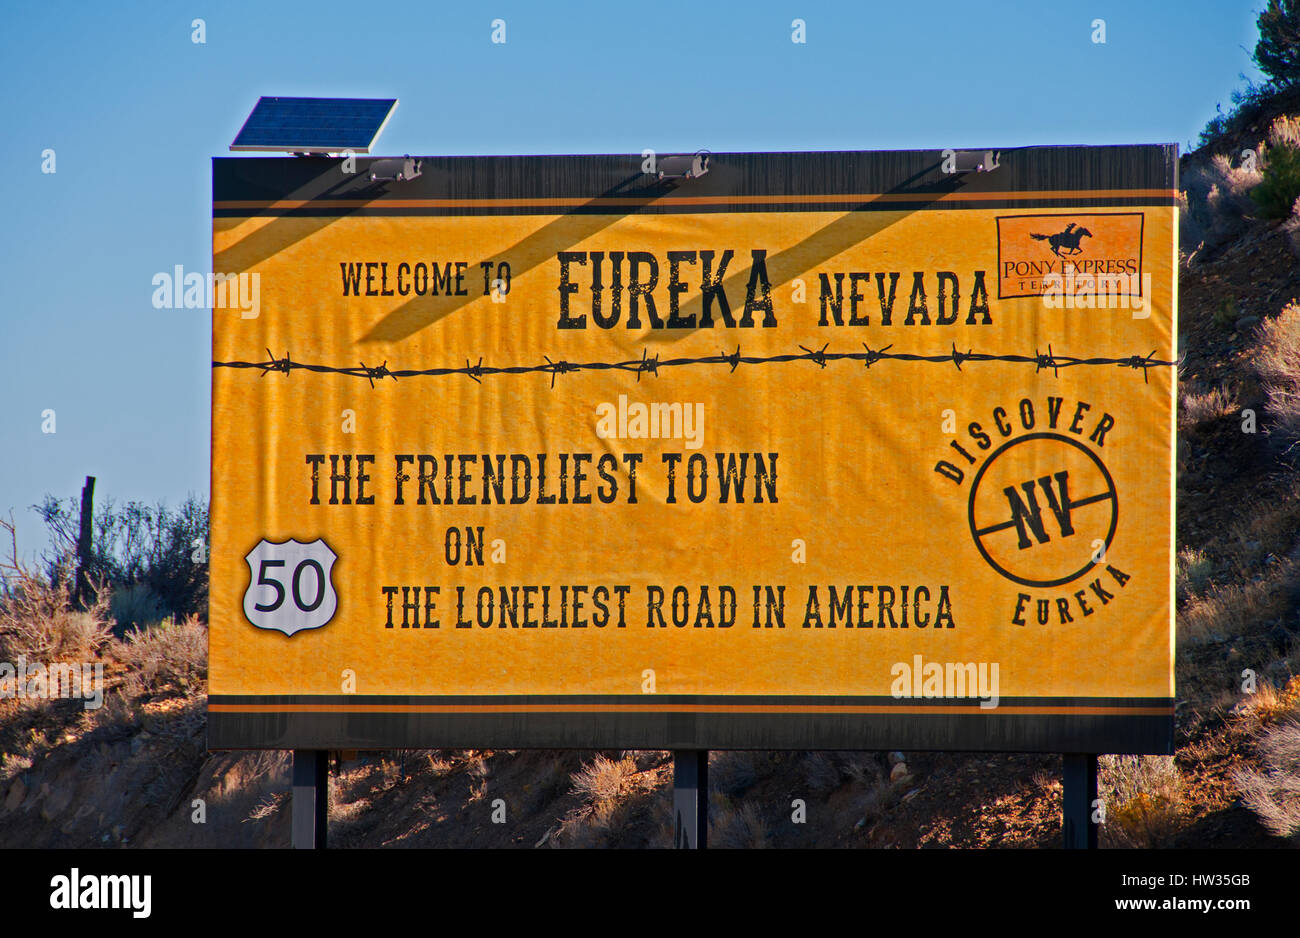 Welcome billboard sign to Eureka, Nevada Stock Photo